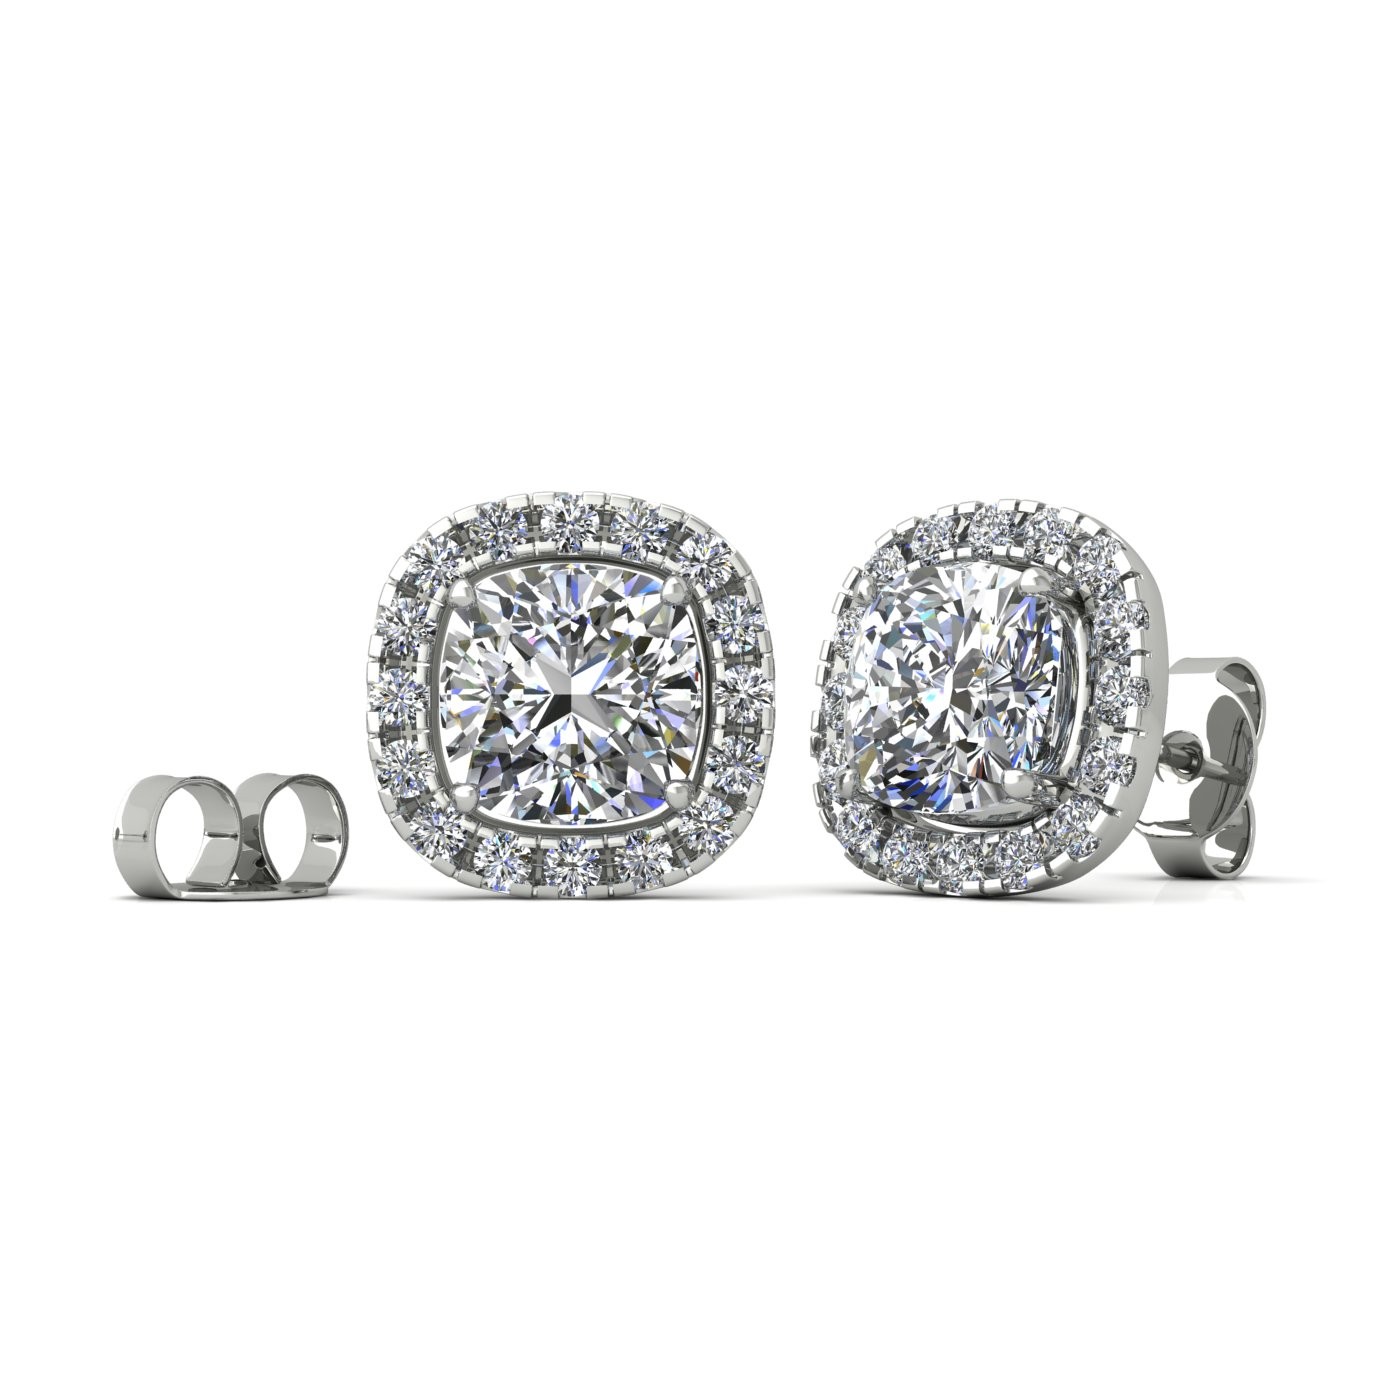 18k white gold  2,0 ct each (4,0 tcw) 4 prongs cushion shape diamond earrings with diamond pavÉ set halo Photos & images